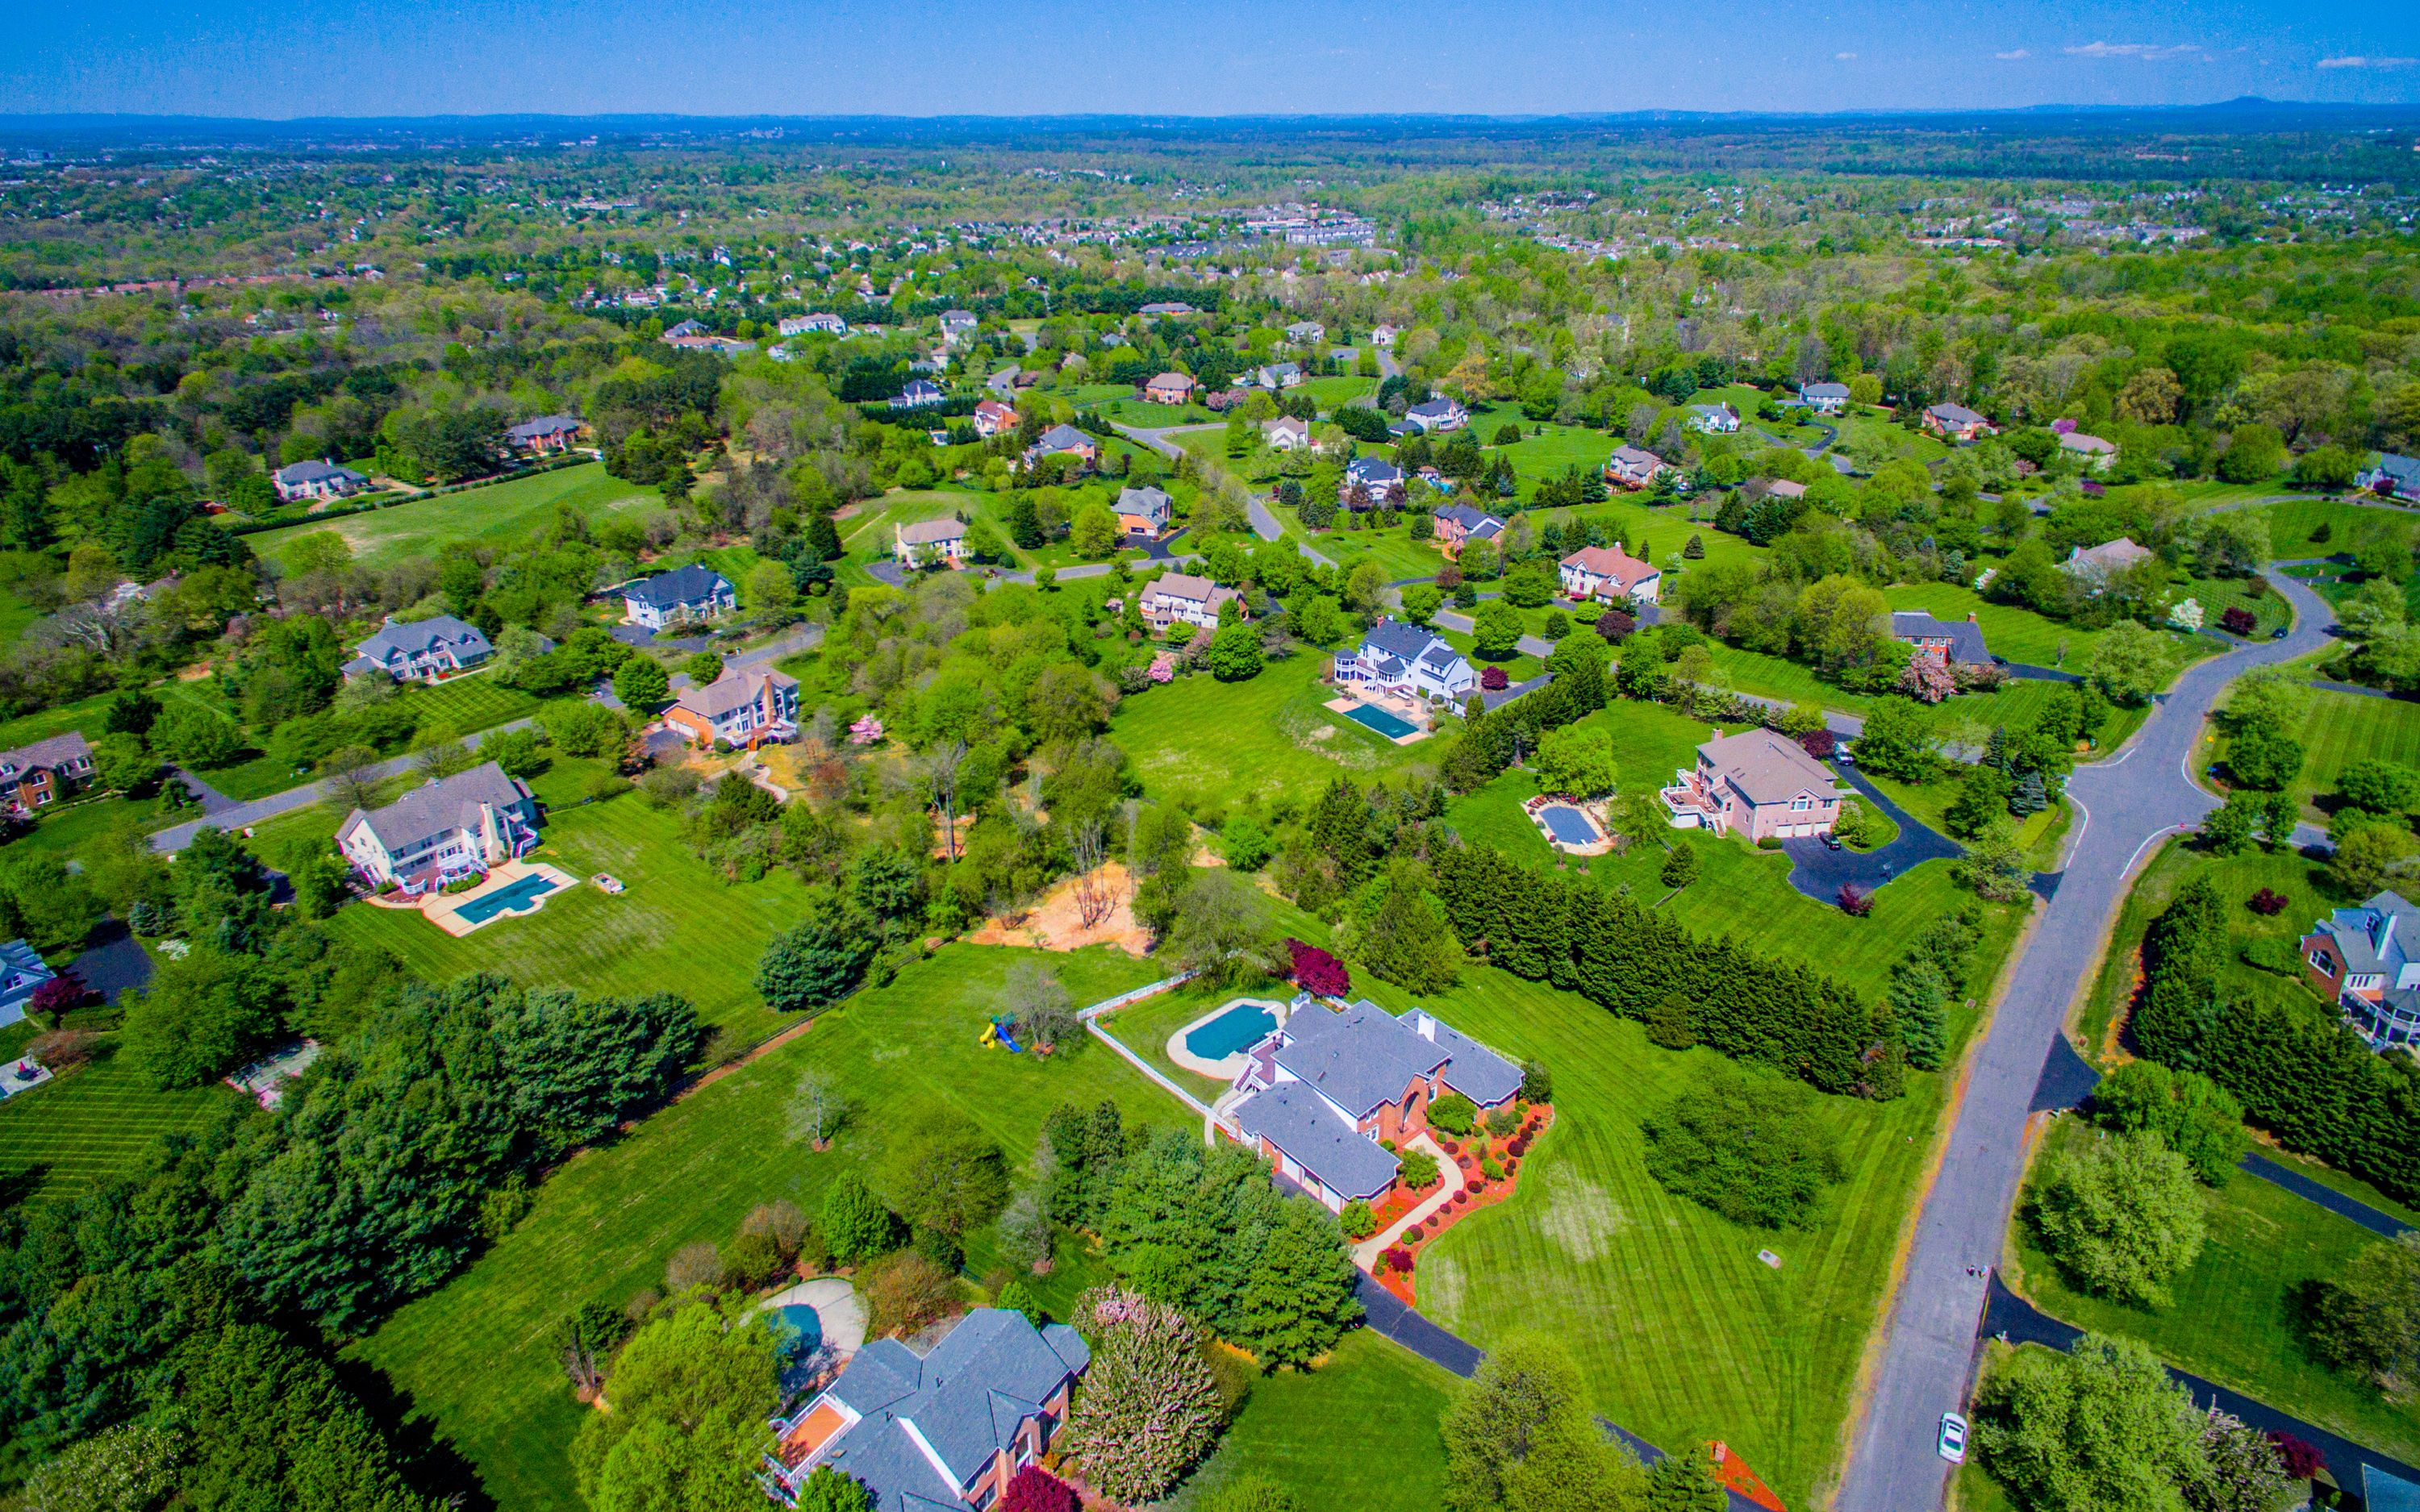 Drone Aerial View of Neighborhood Drone Videos Photos 